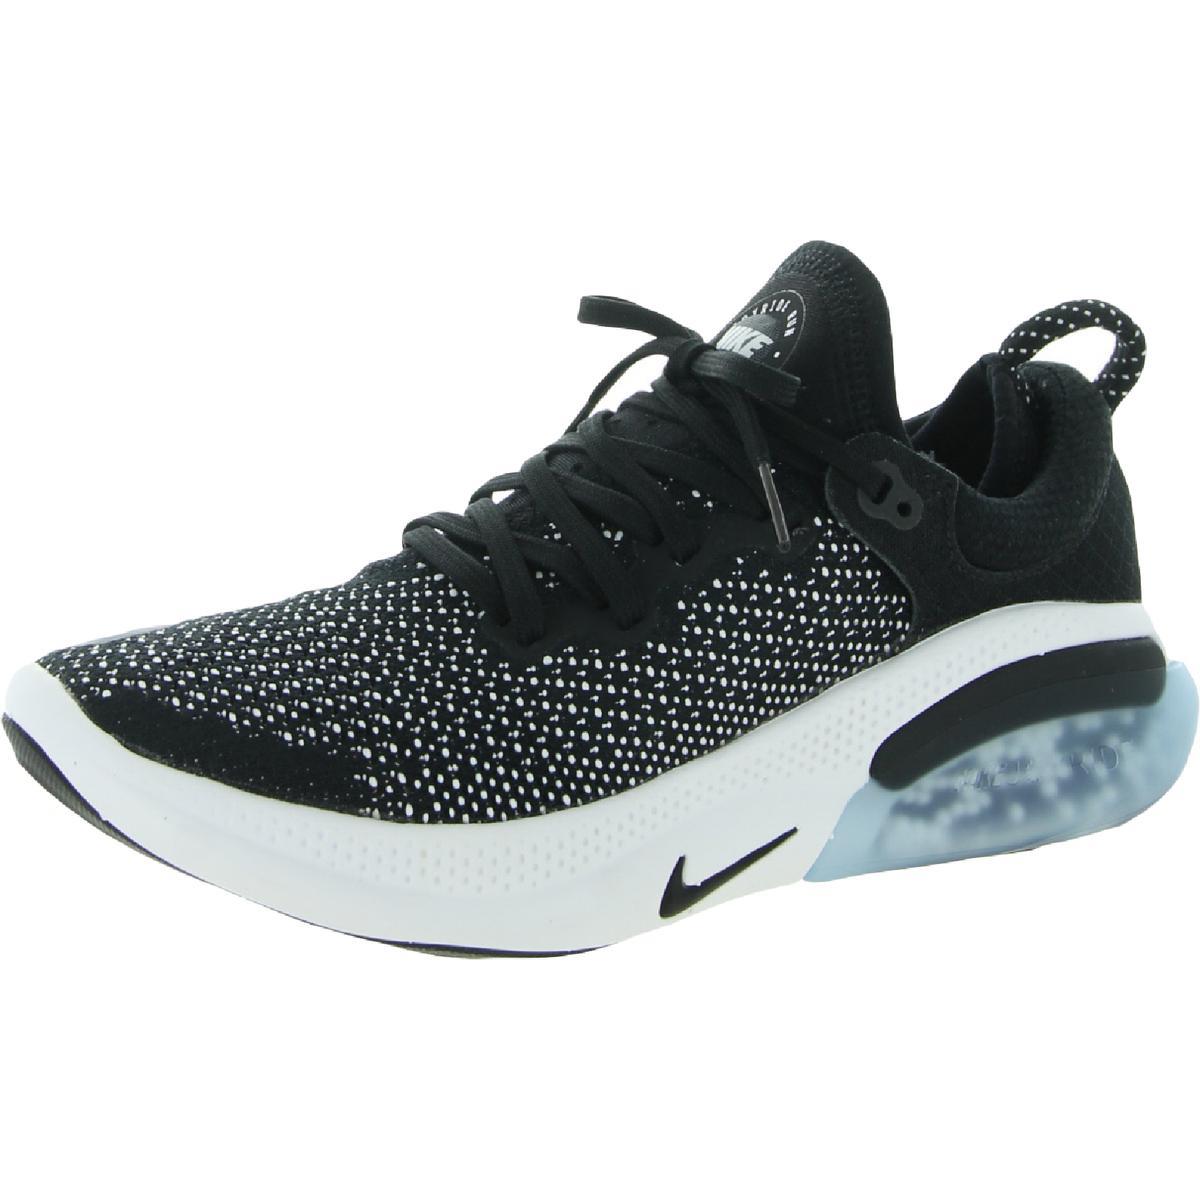 Nike Womens Joyride Run Flyknit Fitness Workout Running Shoes Sneakers Bhfo 8211 Black/Black-White